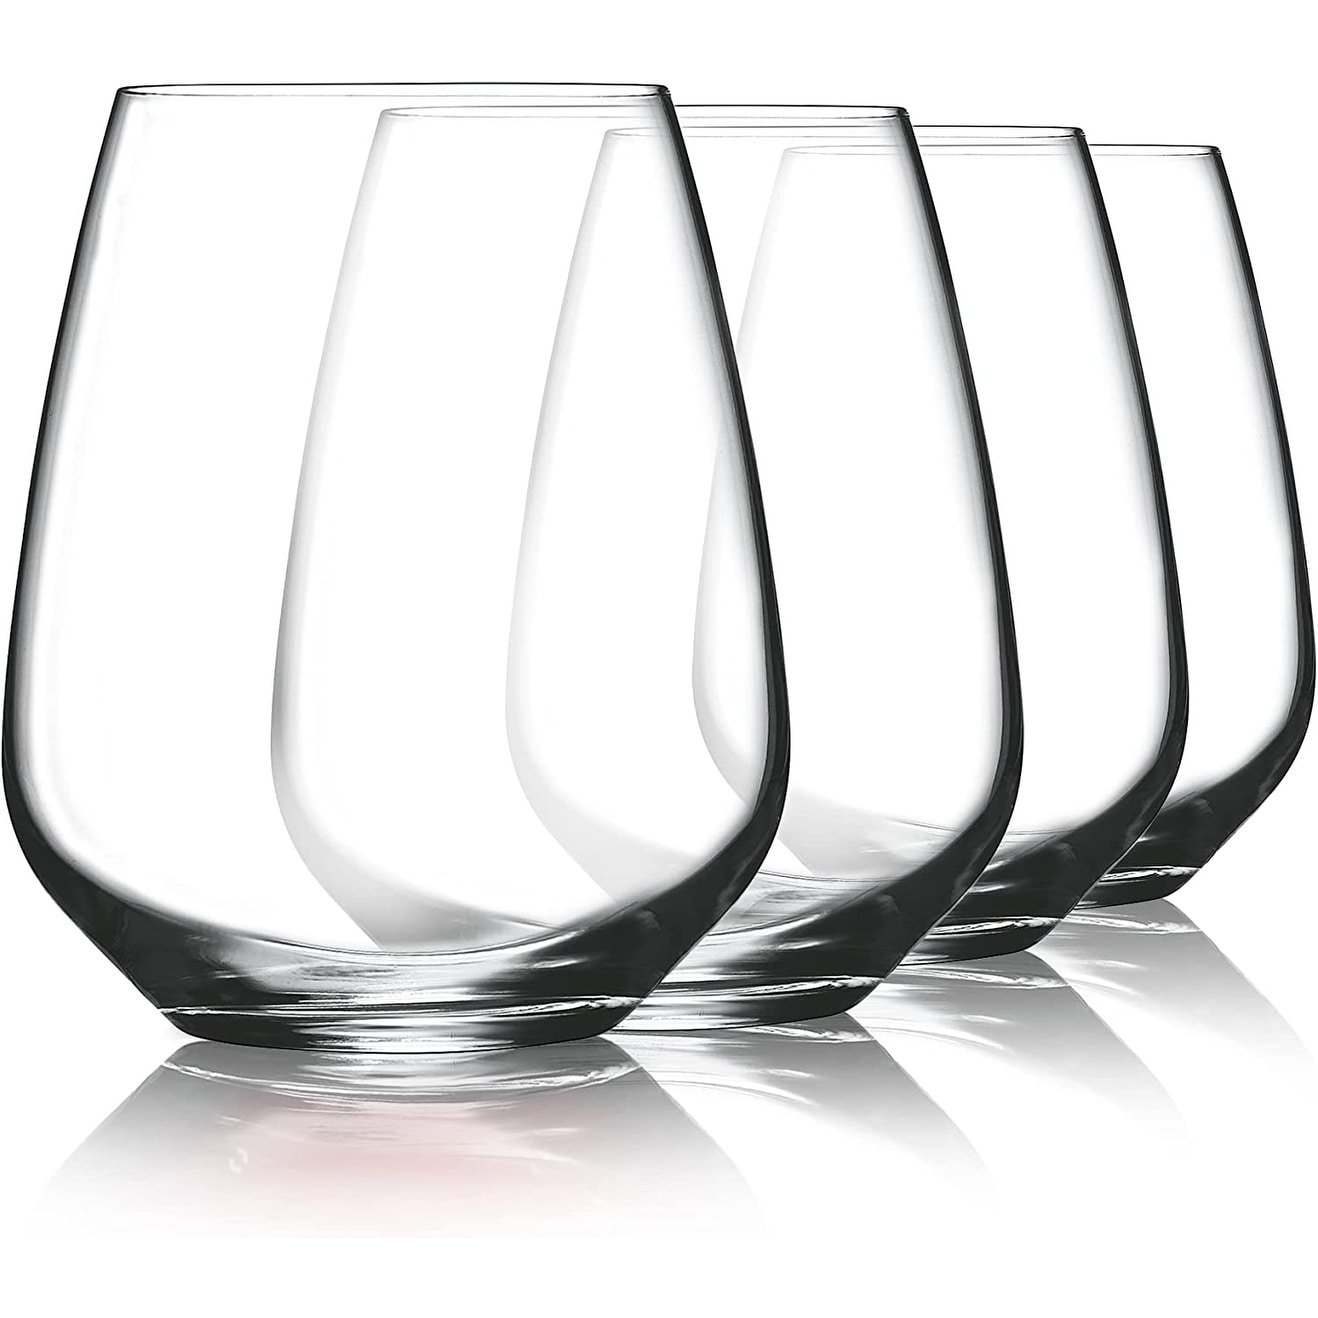 Luigi Bormioli Crescendo 13 oz. Chardonnay Wine Glasses, Set of 4